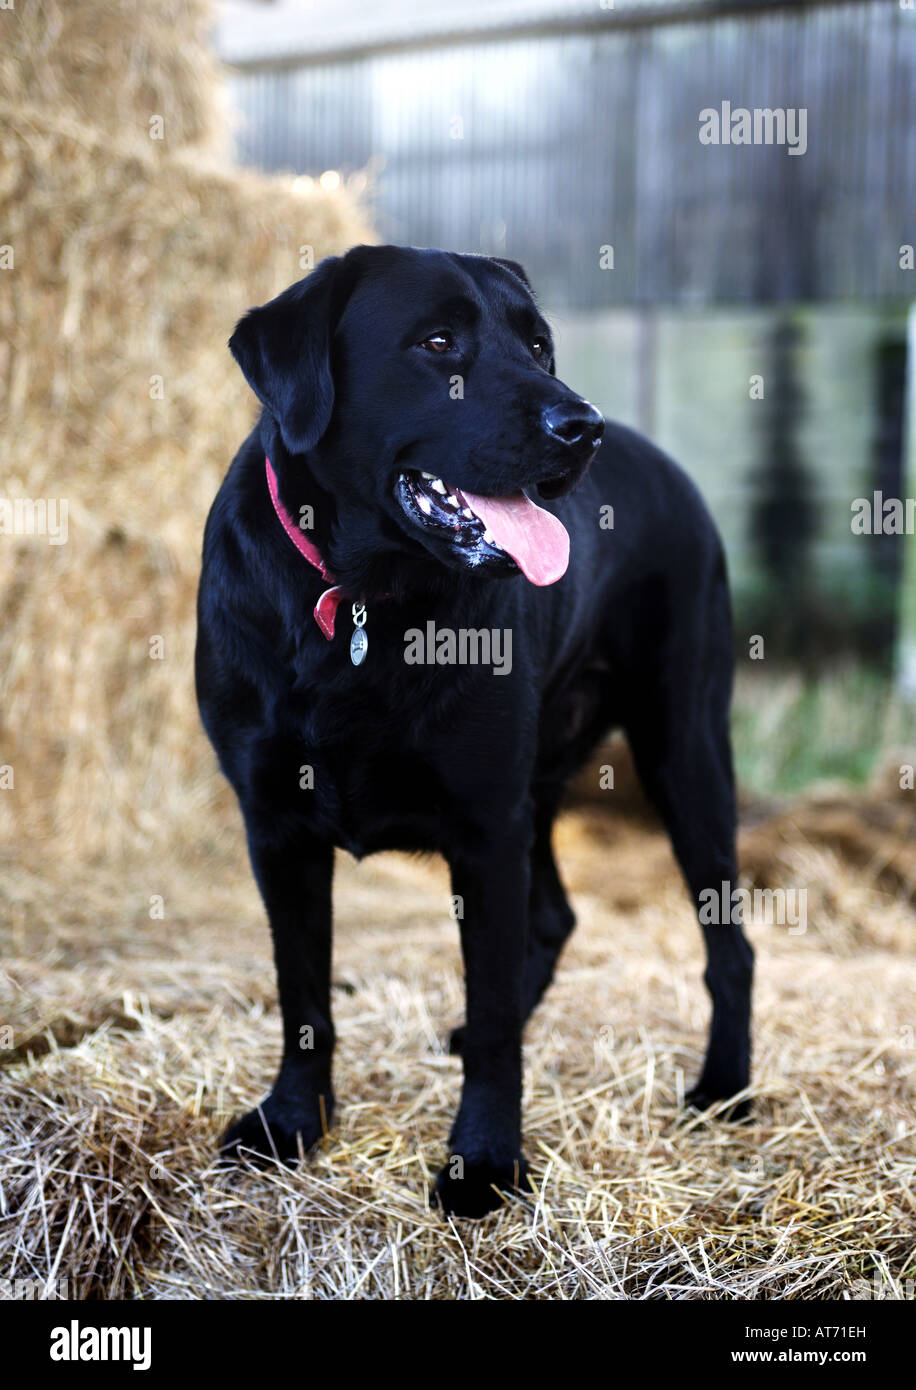 Black labrador on straw bales Stock Photo